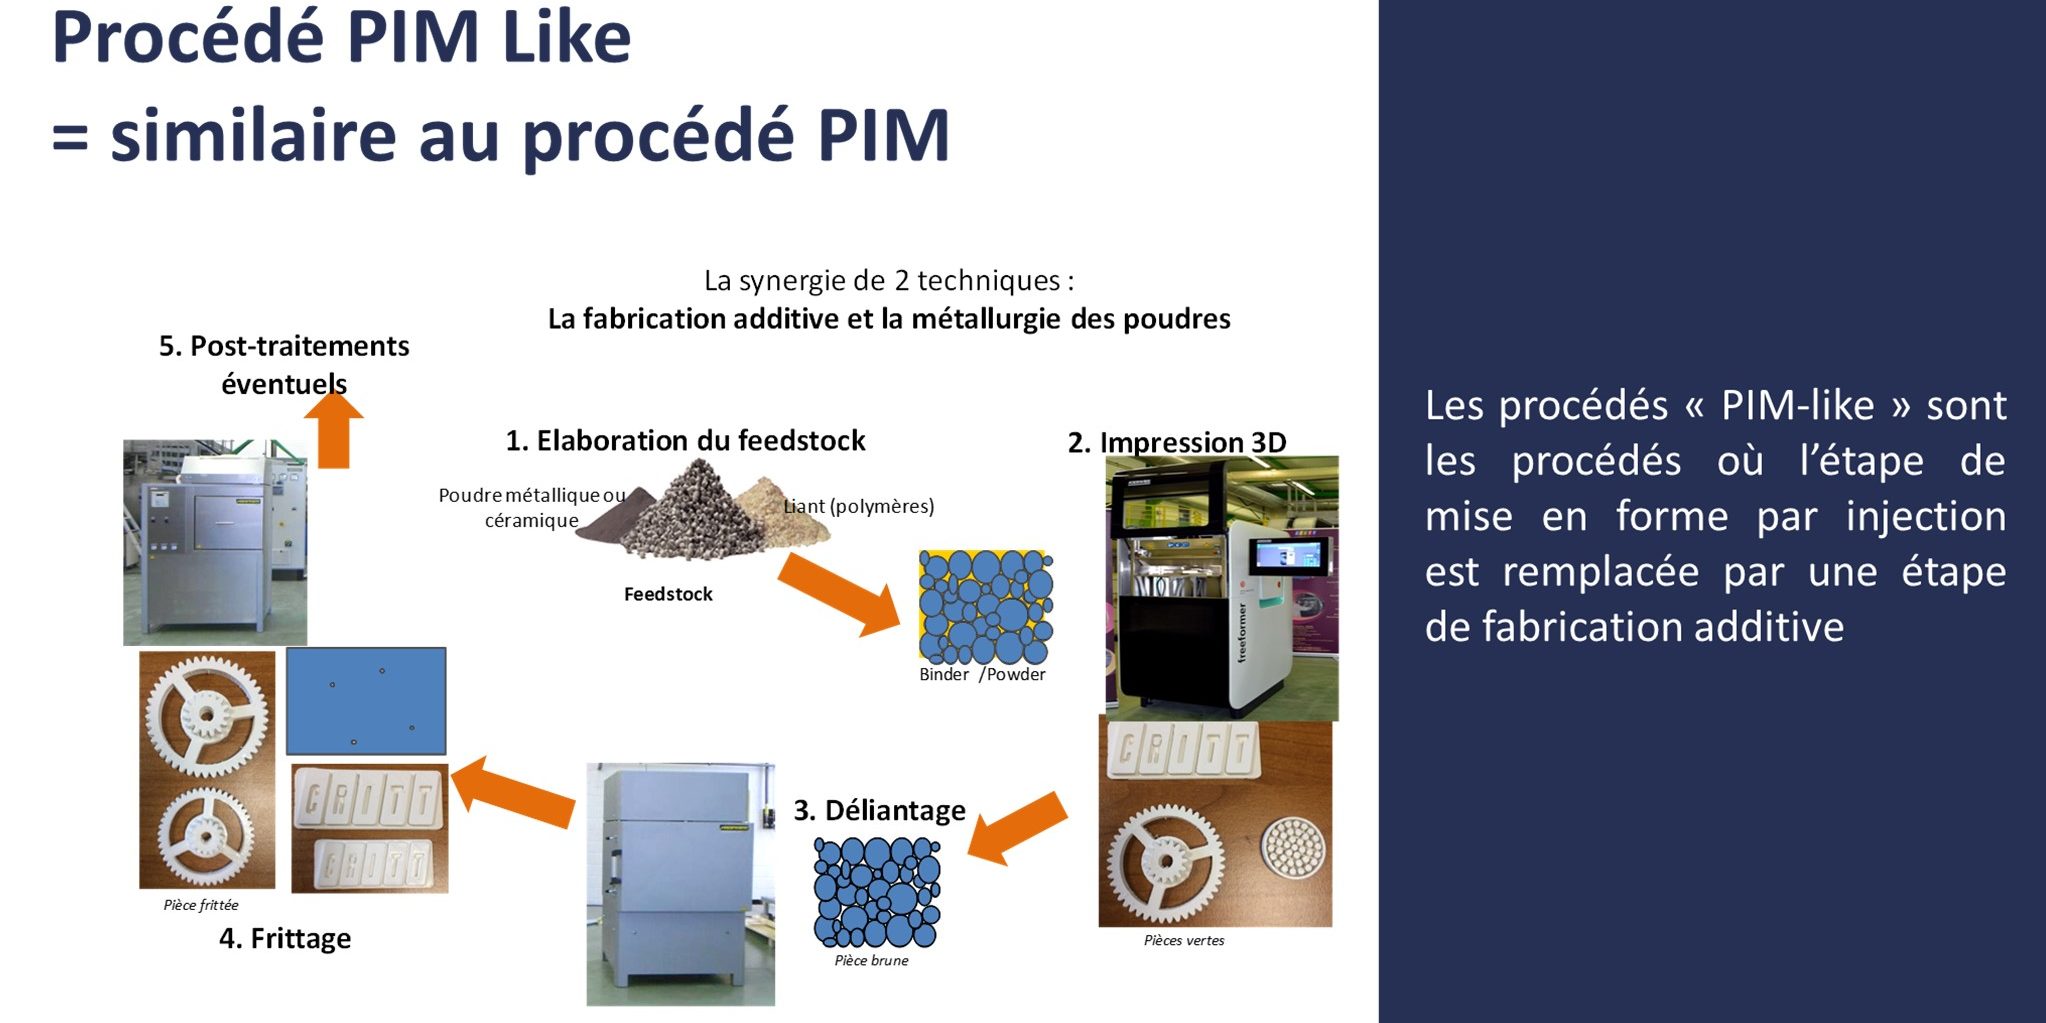 Technologie CDLM - Fabrication additive - Impression 3d - Le guide